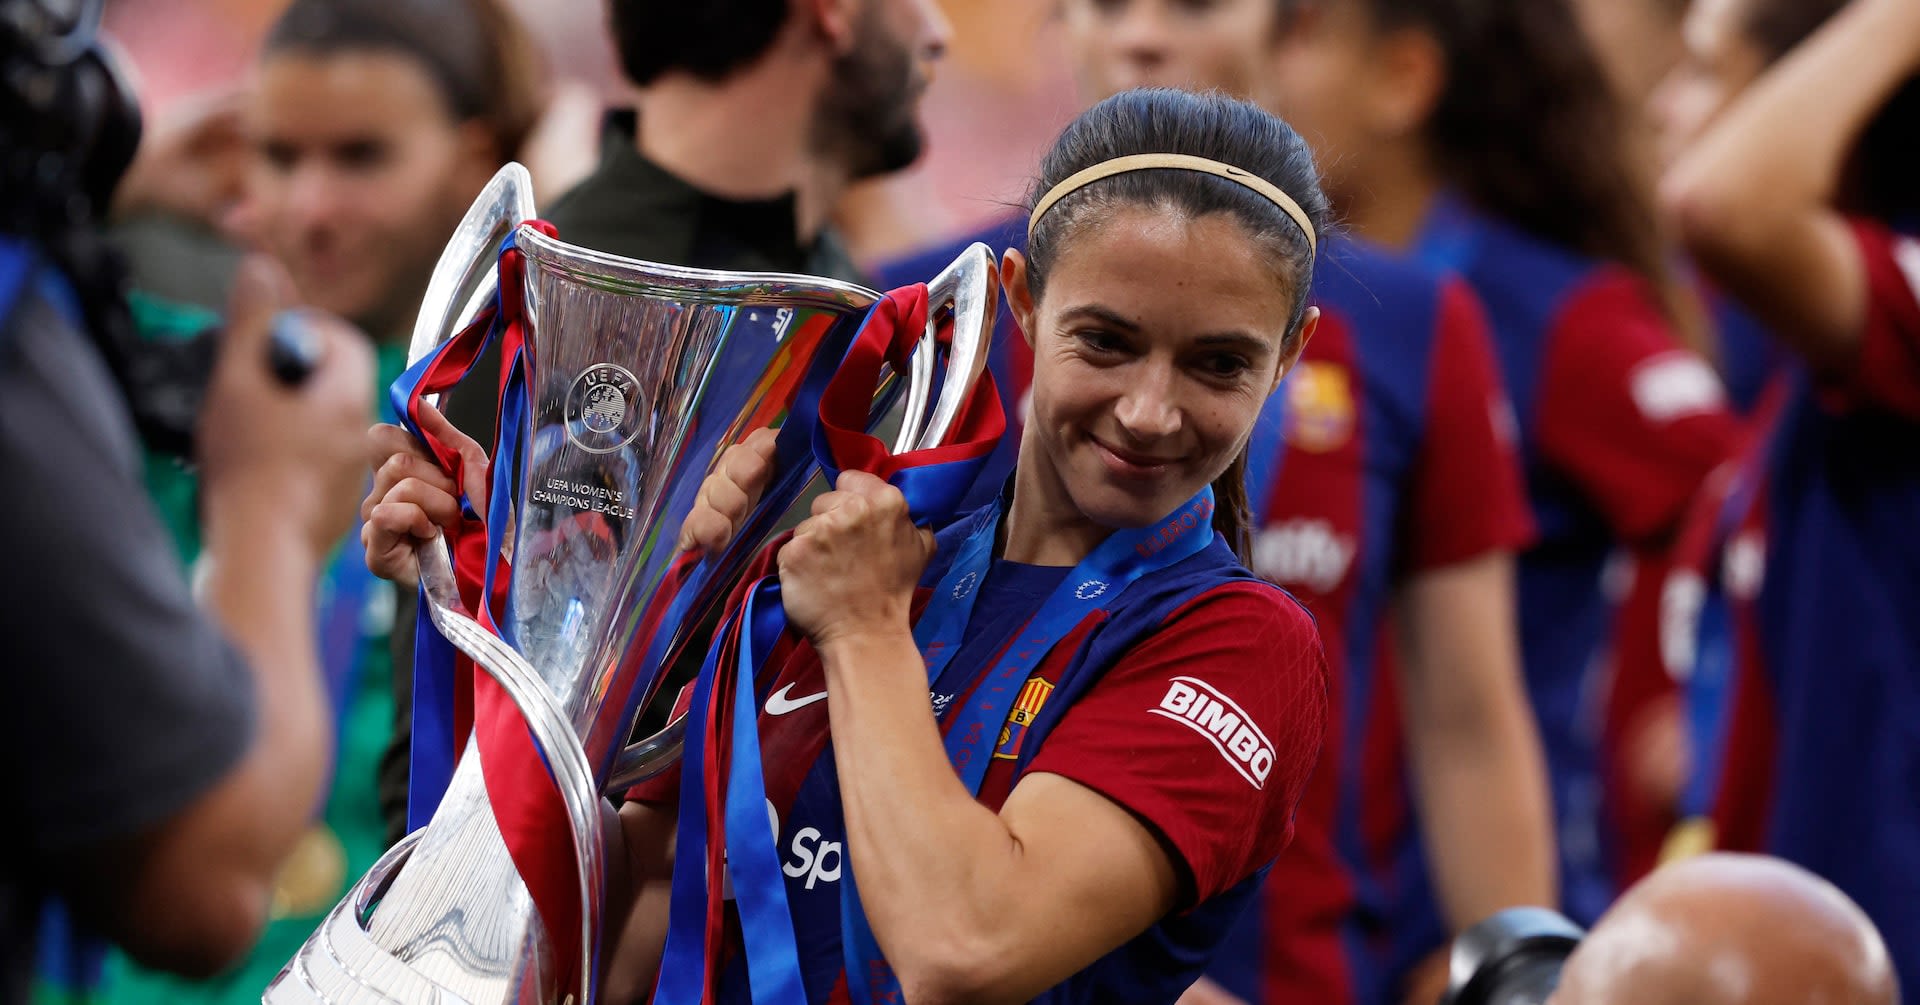 Barcelona's Bonmati named Women's Champions League player of the season